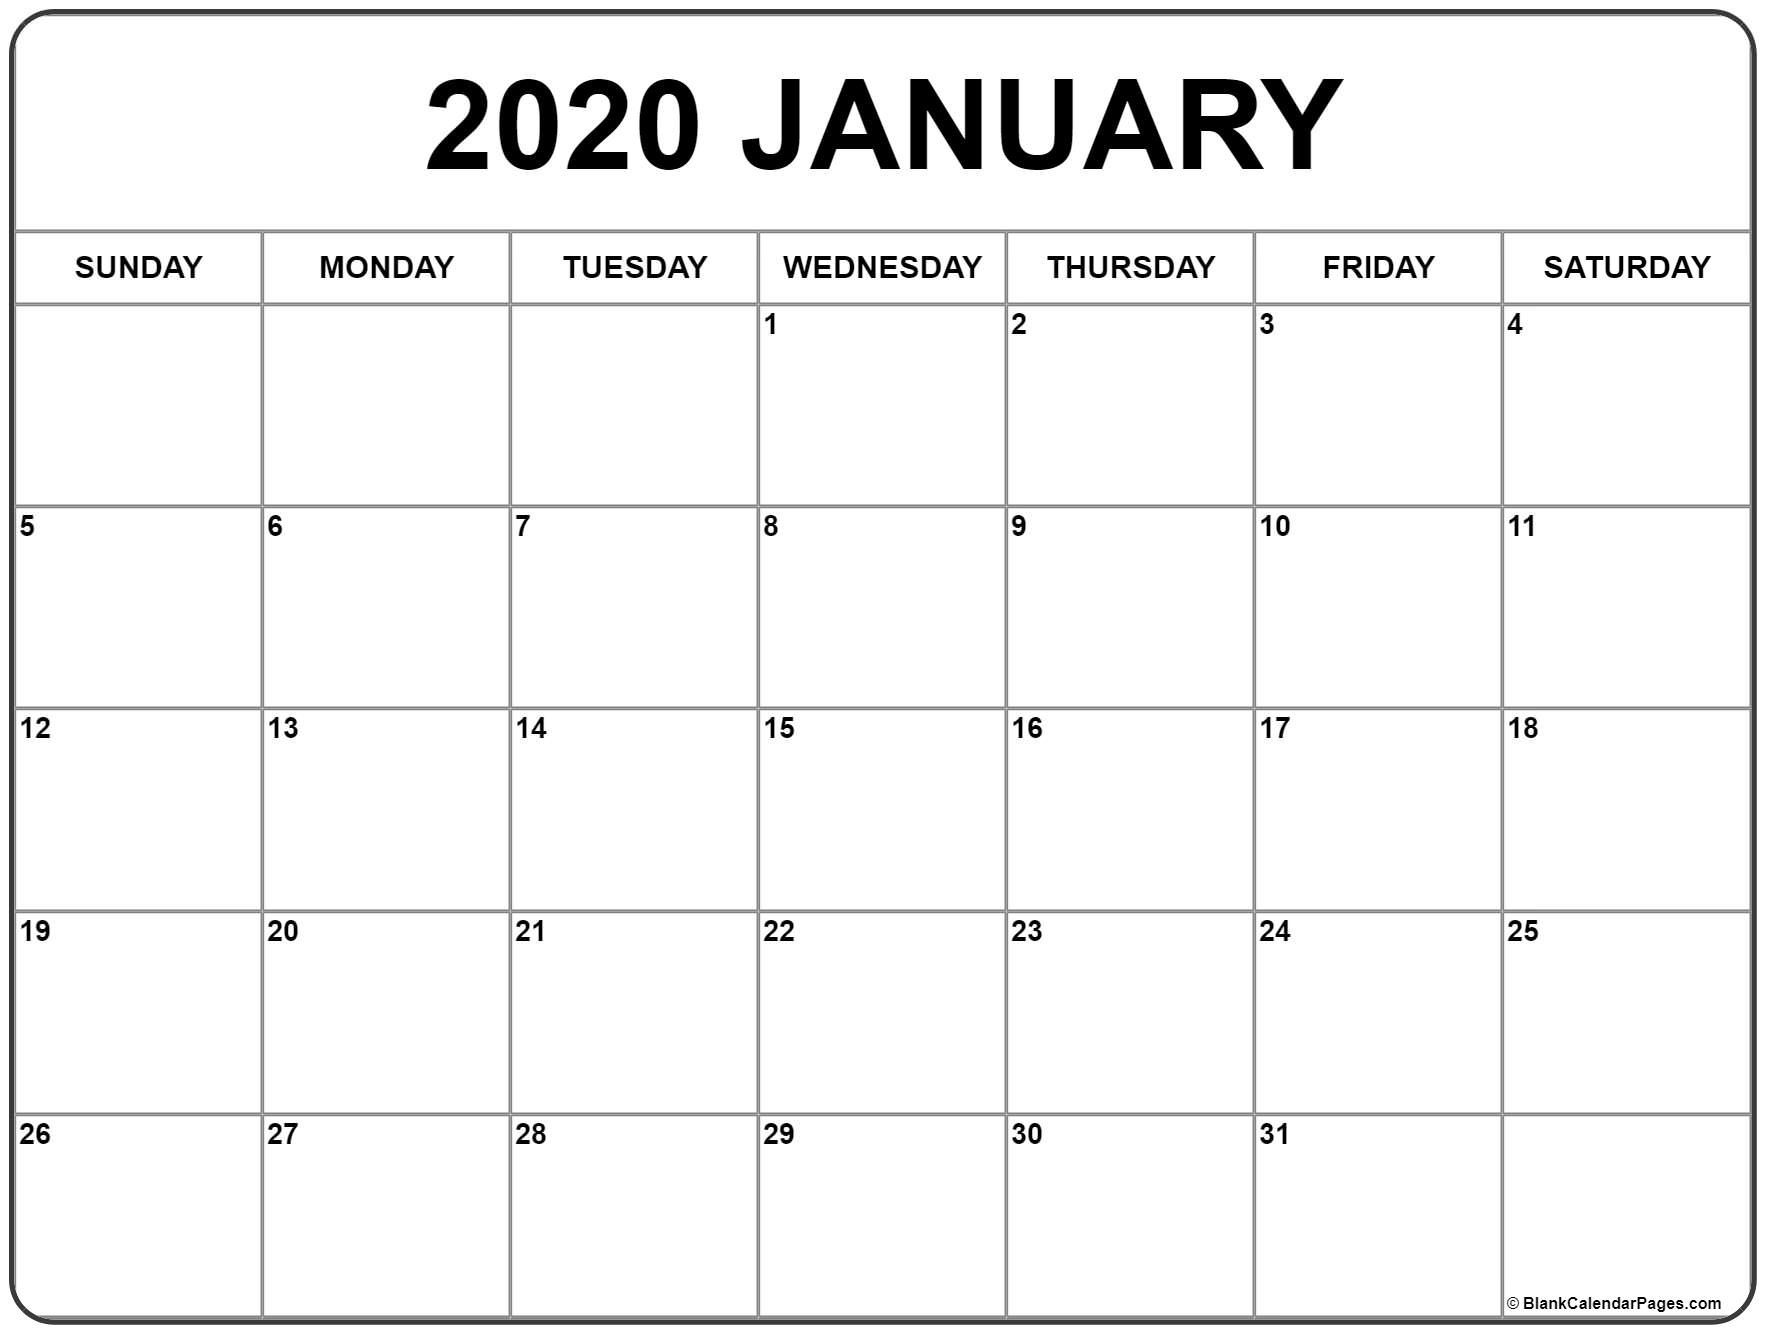 January 2020 Calendar | Free Printable Monthly Calendars Perky January 2020 Calendar Printable Free